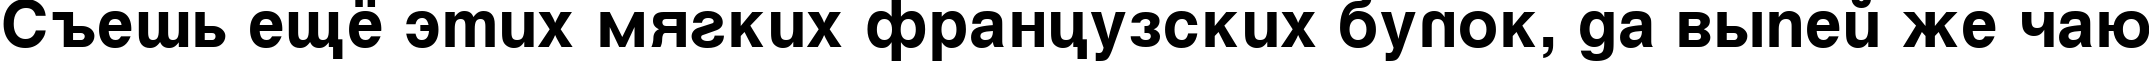 Пример написания шрифтом Vanta Bold Plain:001.001 текста на русском